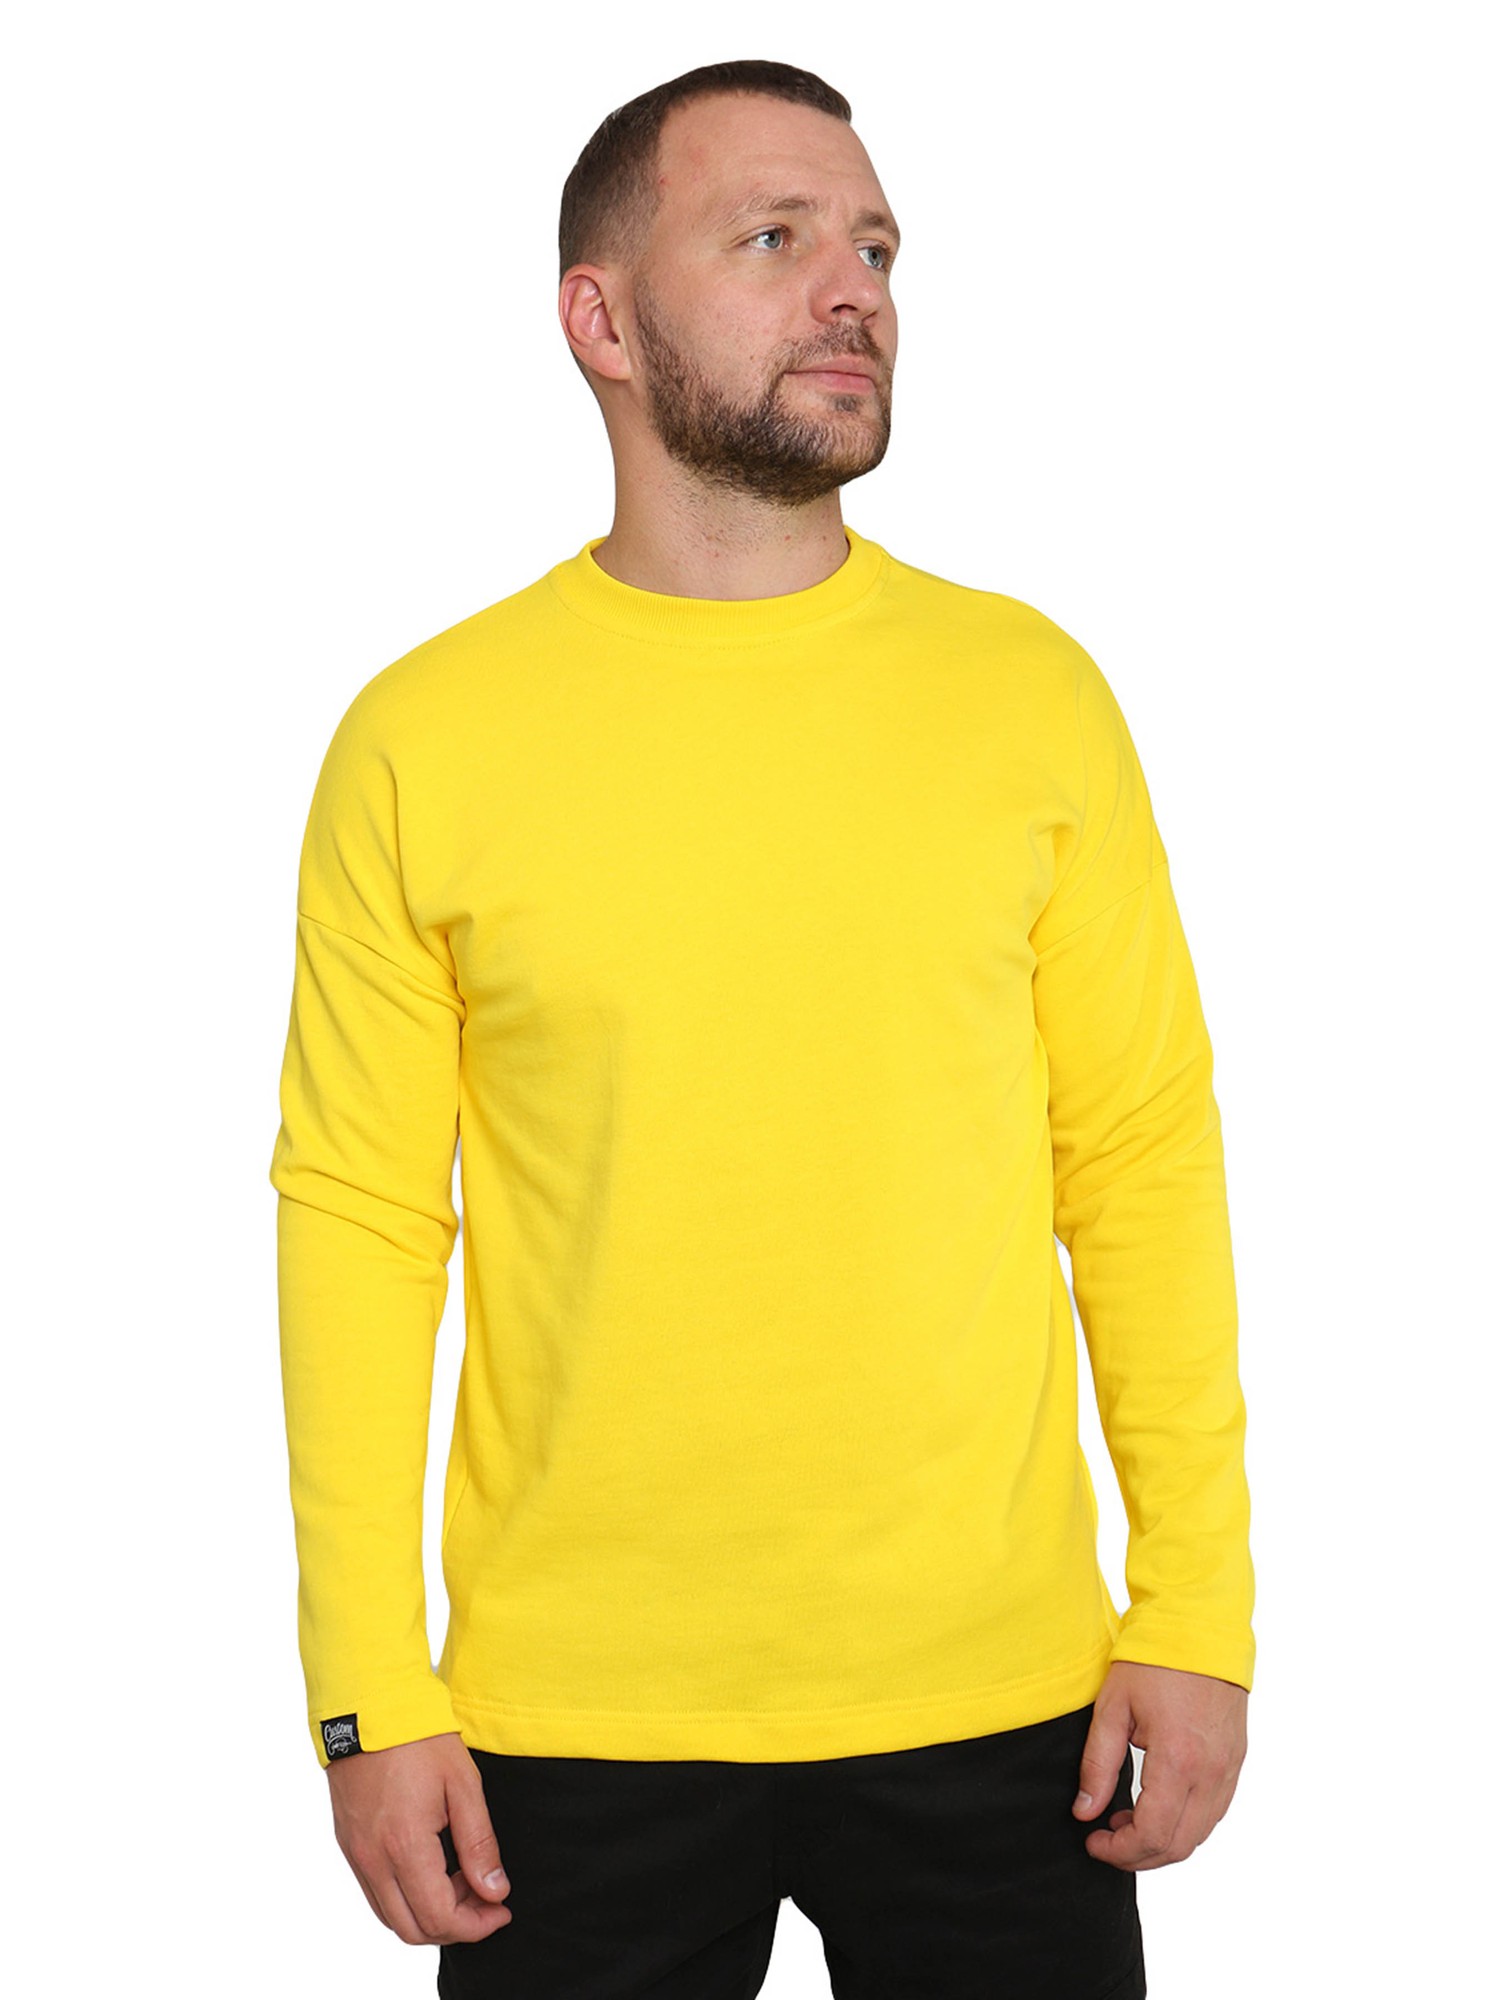 Sweatshirt yellow Custom Wear